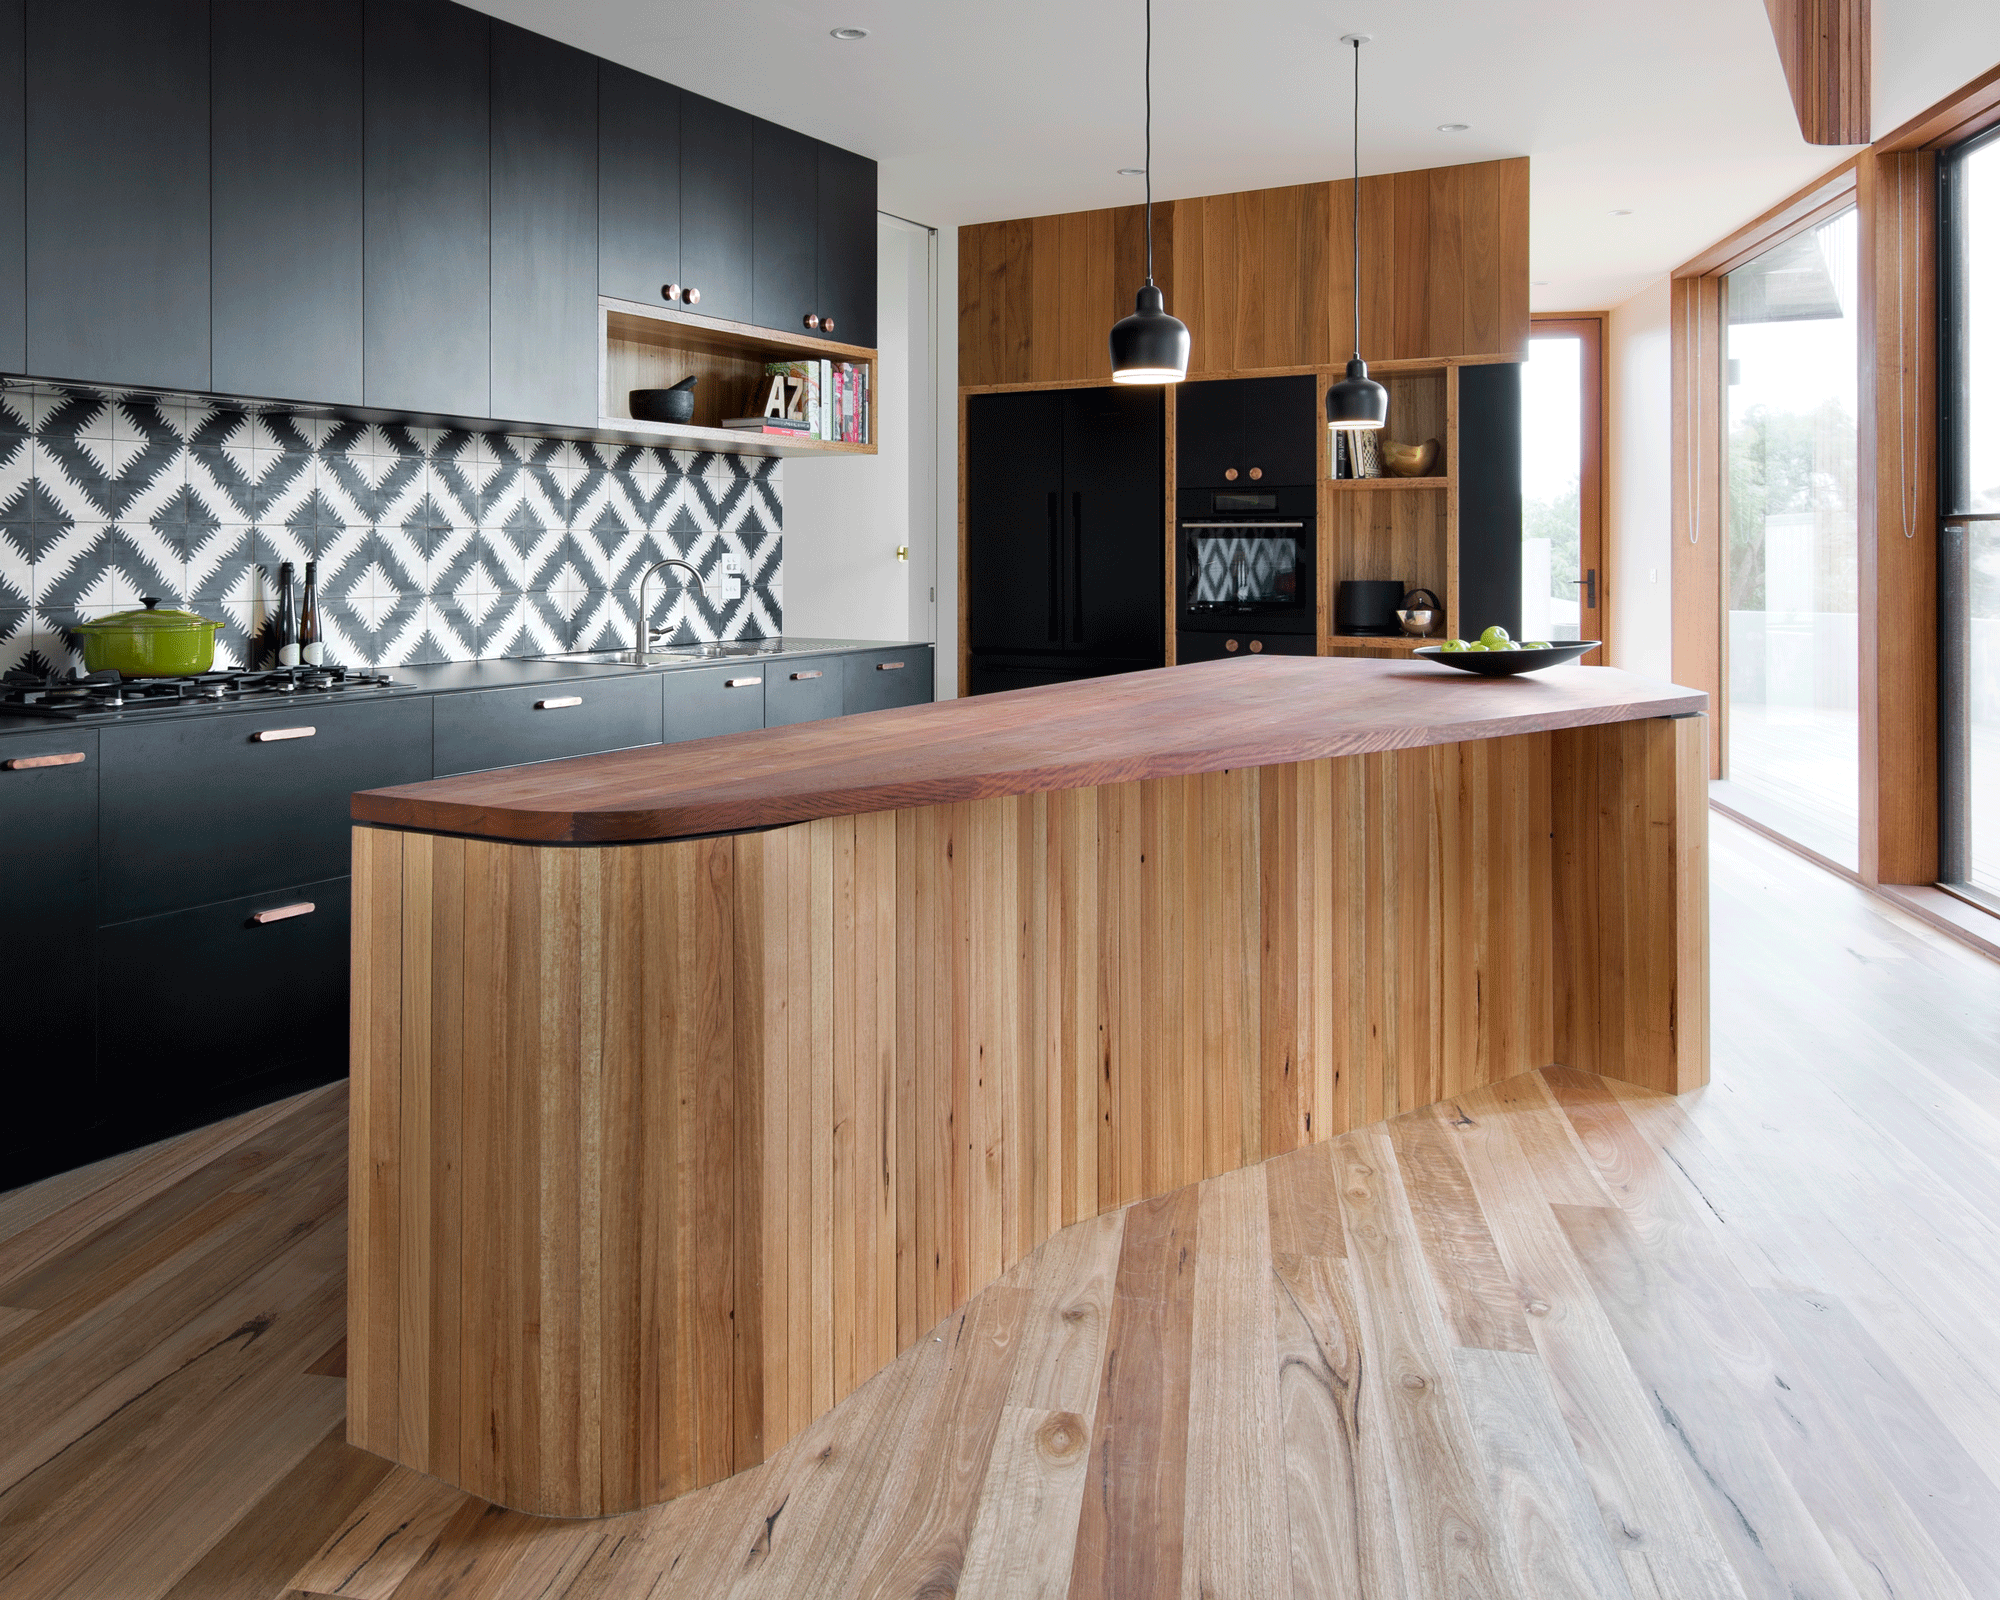 Wavy kitchen island made of wood